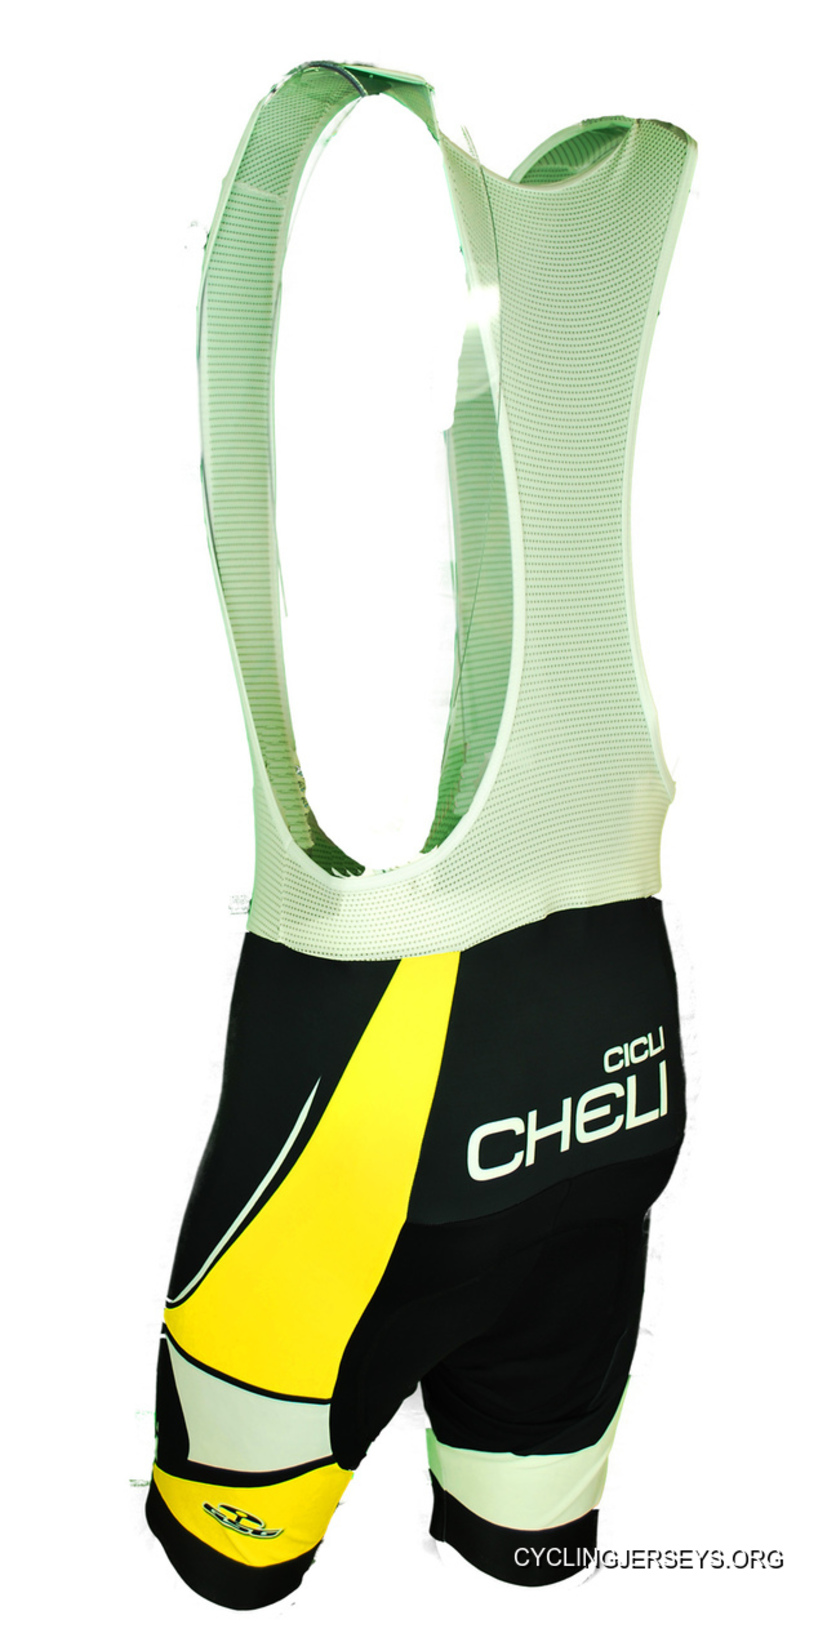 2016 Luca Cicli Cheli Bib Shorts Cheap To Buy